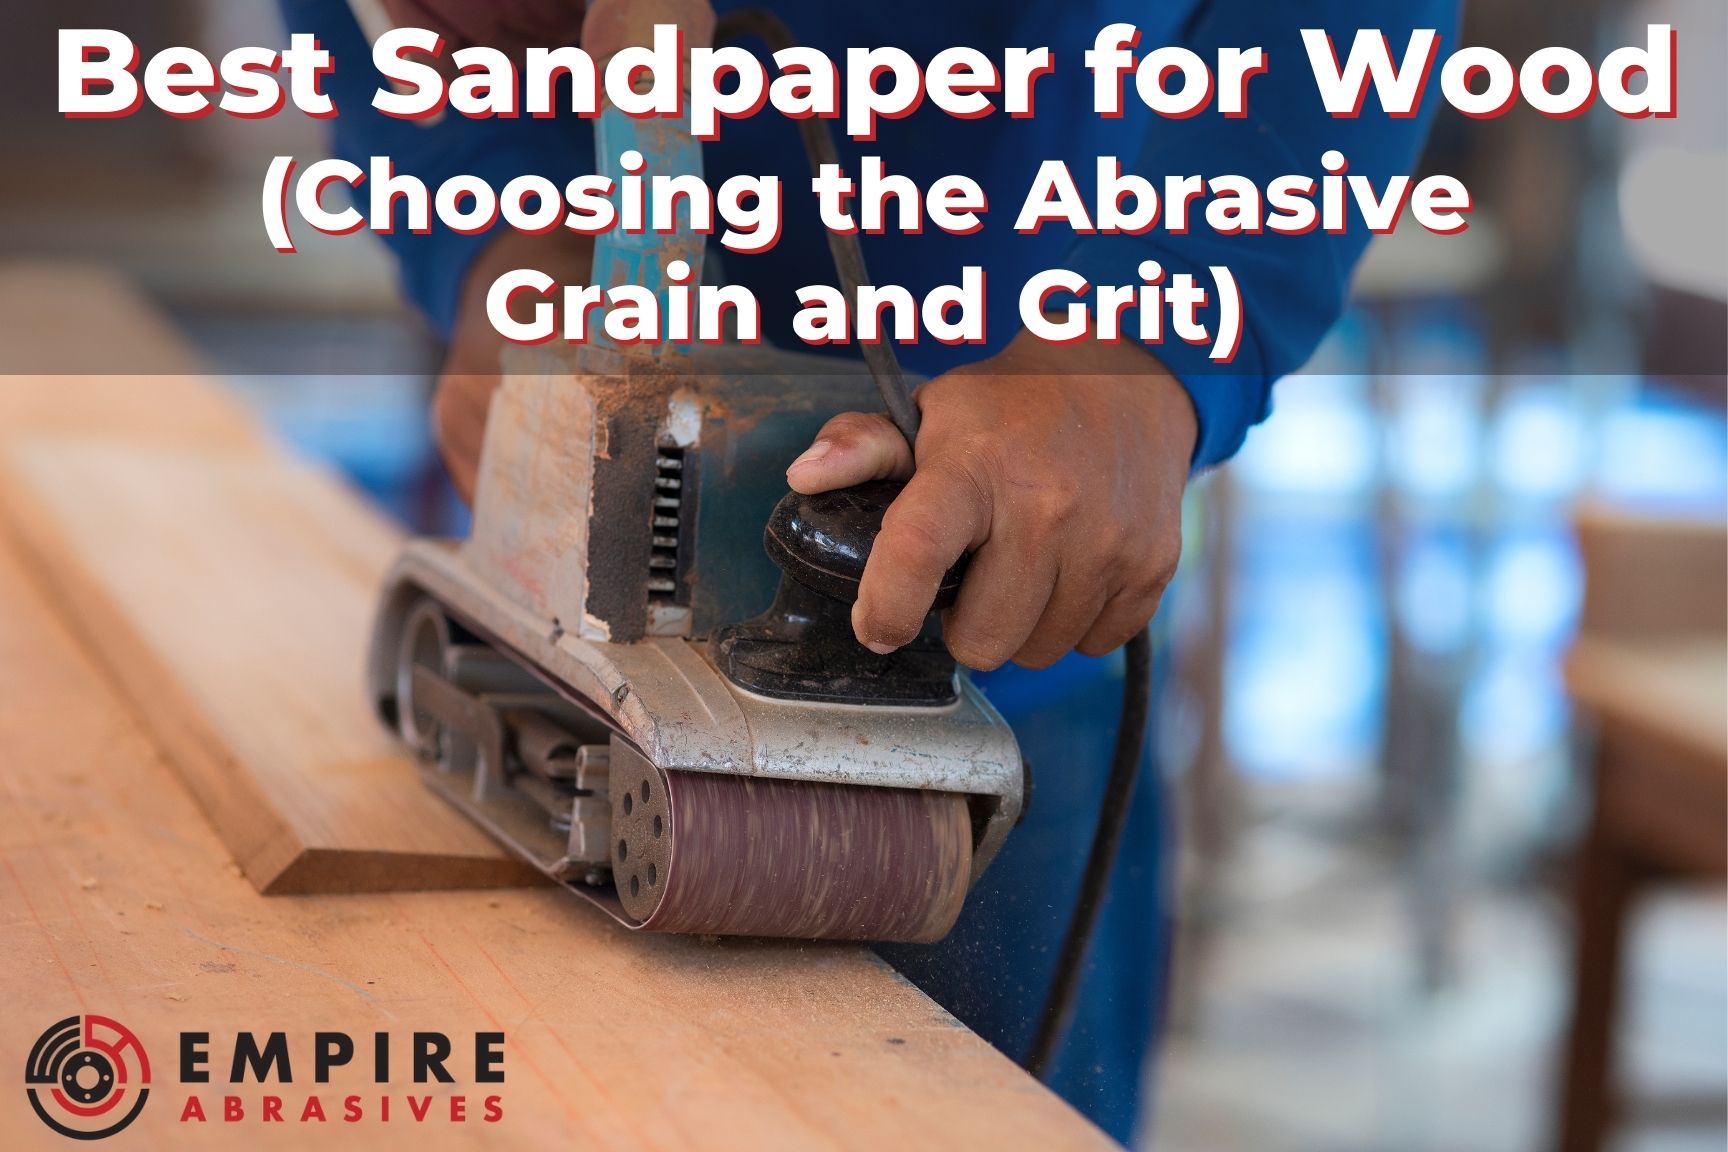 Best Sandpaper for Wood: Choosing the Abrasive Grain and Grit